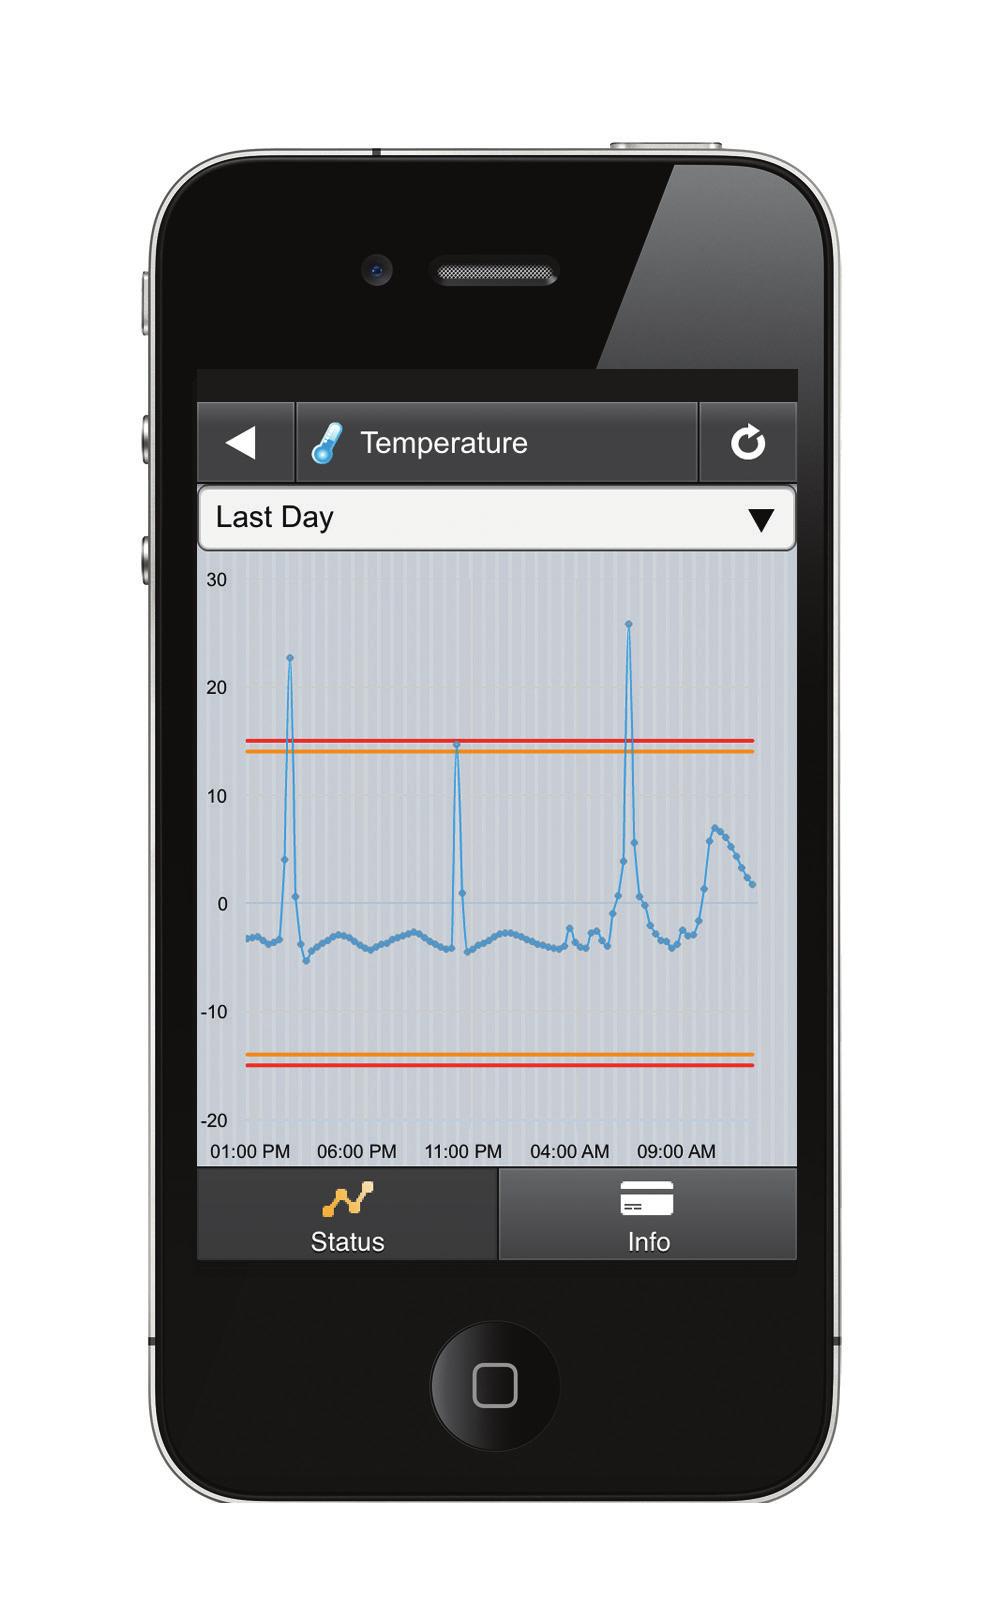 LabAlert TM Monitoring System Your samples